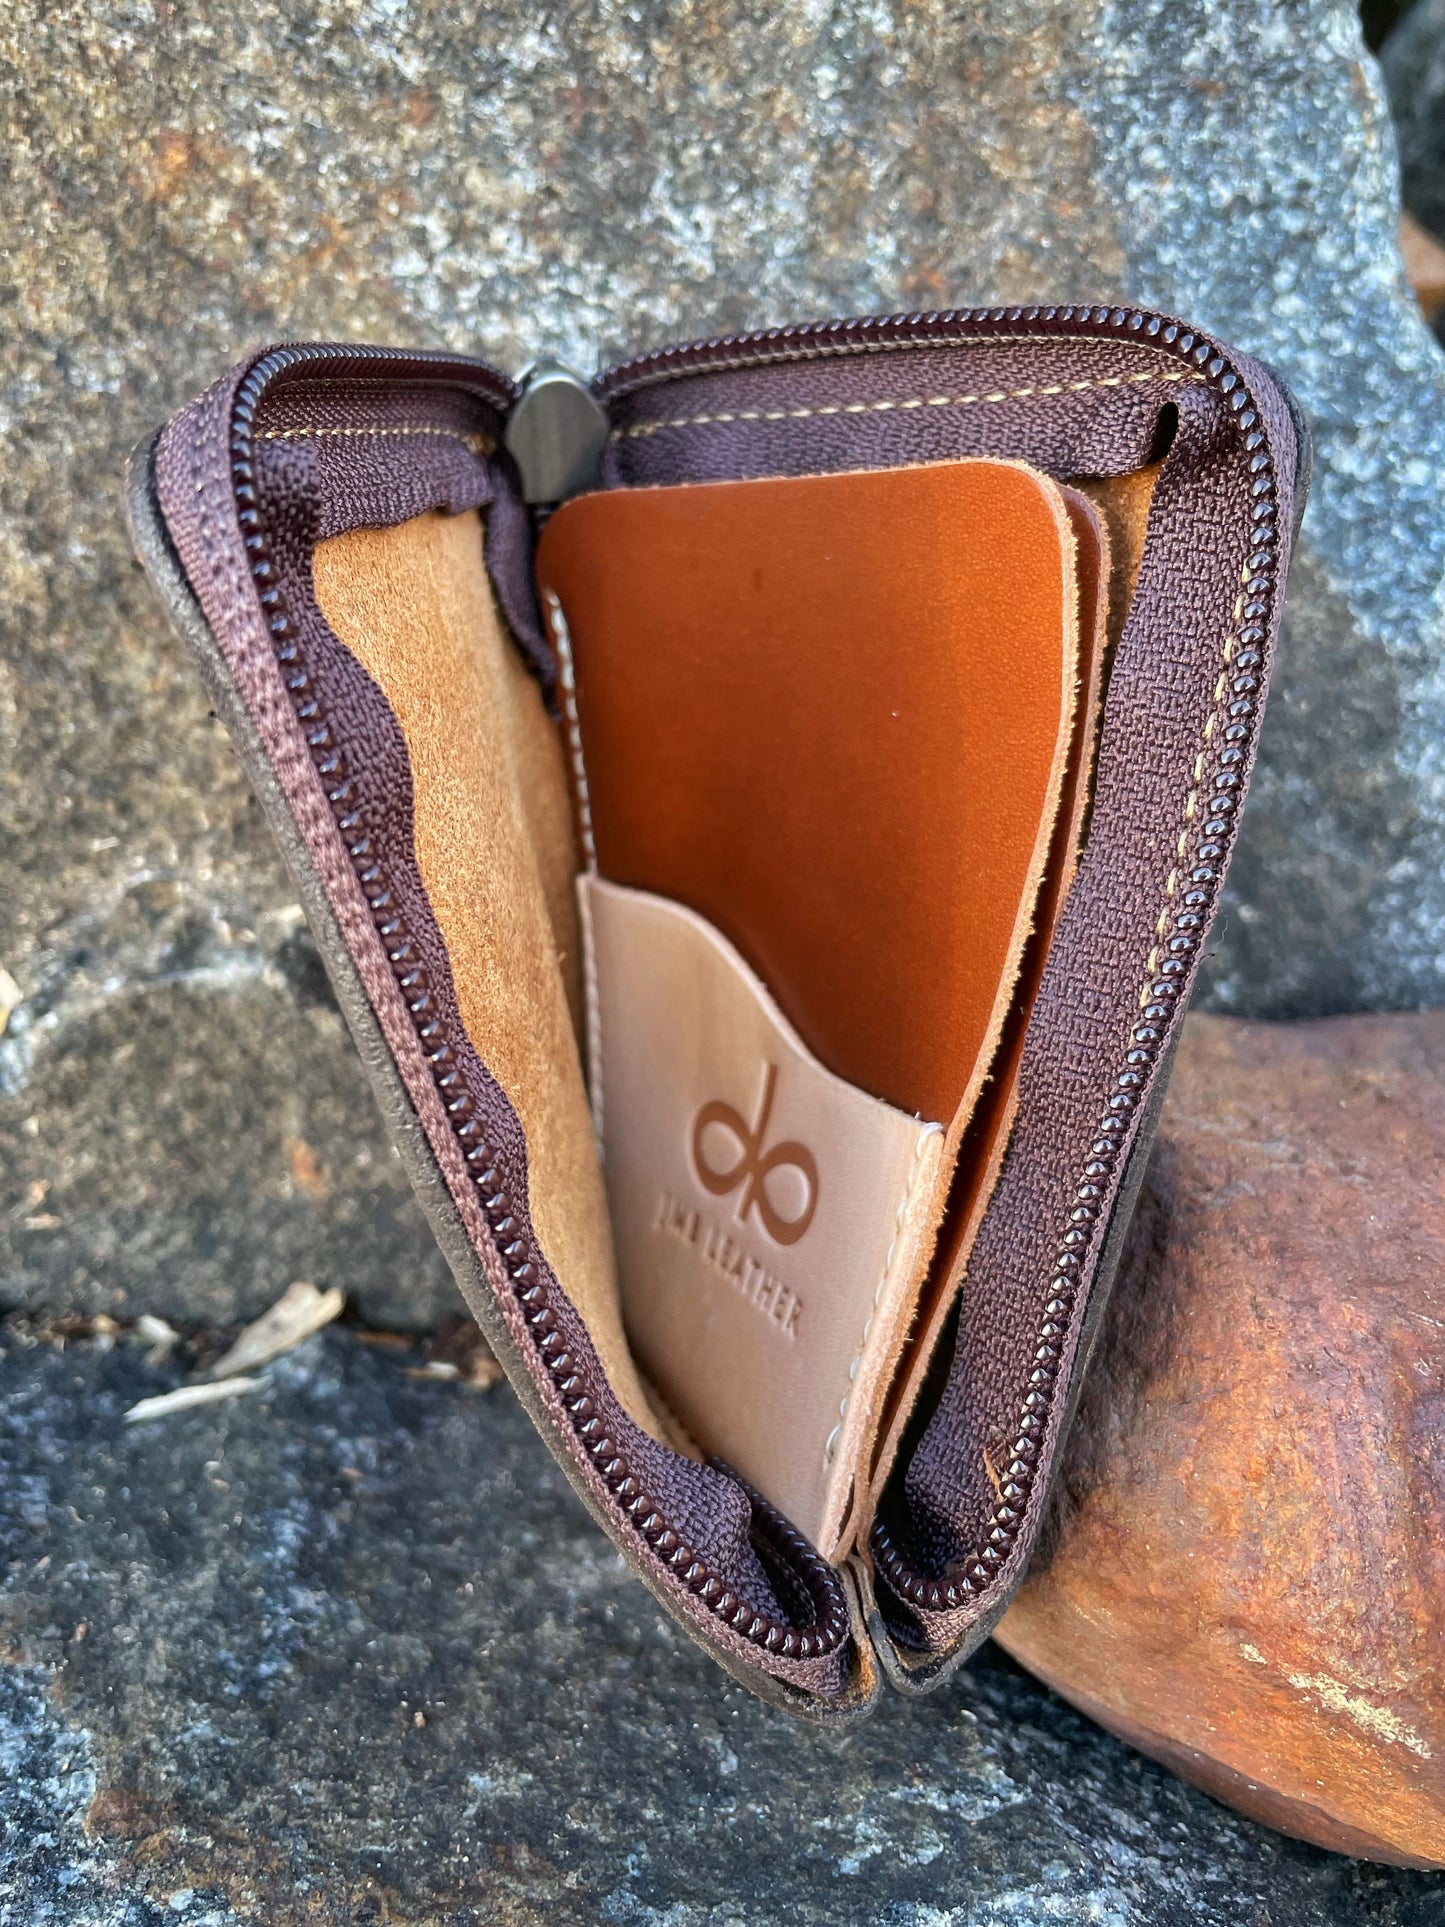 Compact ZIP wallet vintage brown